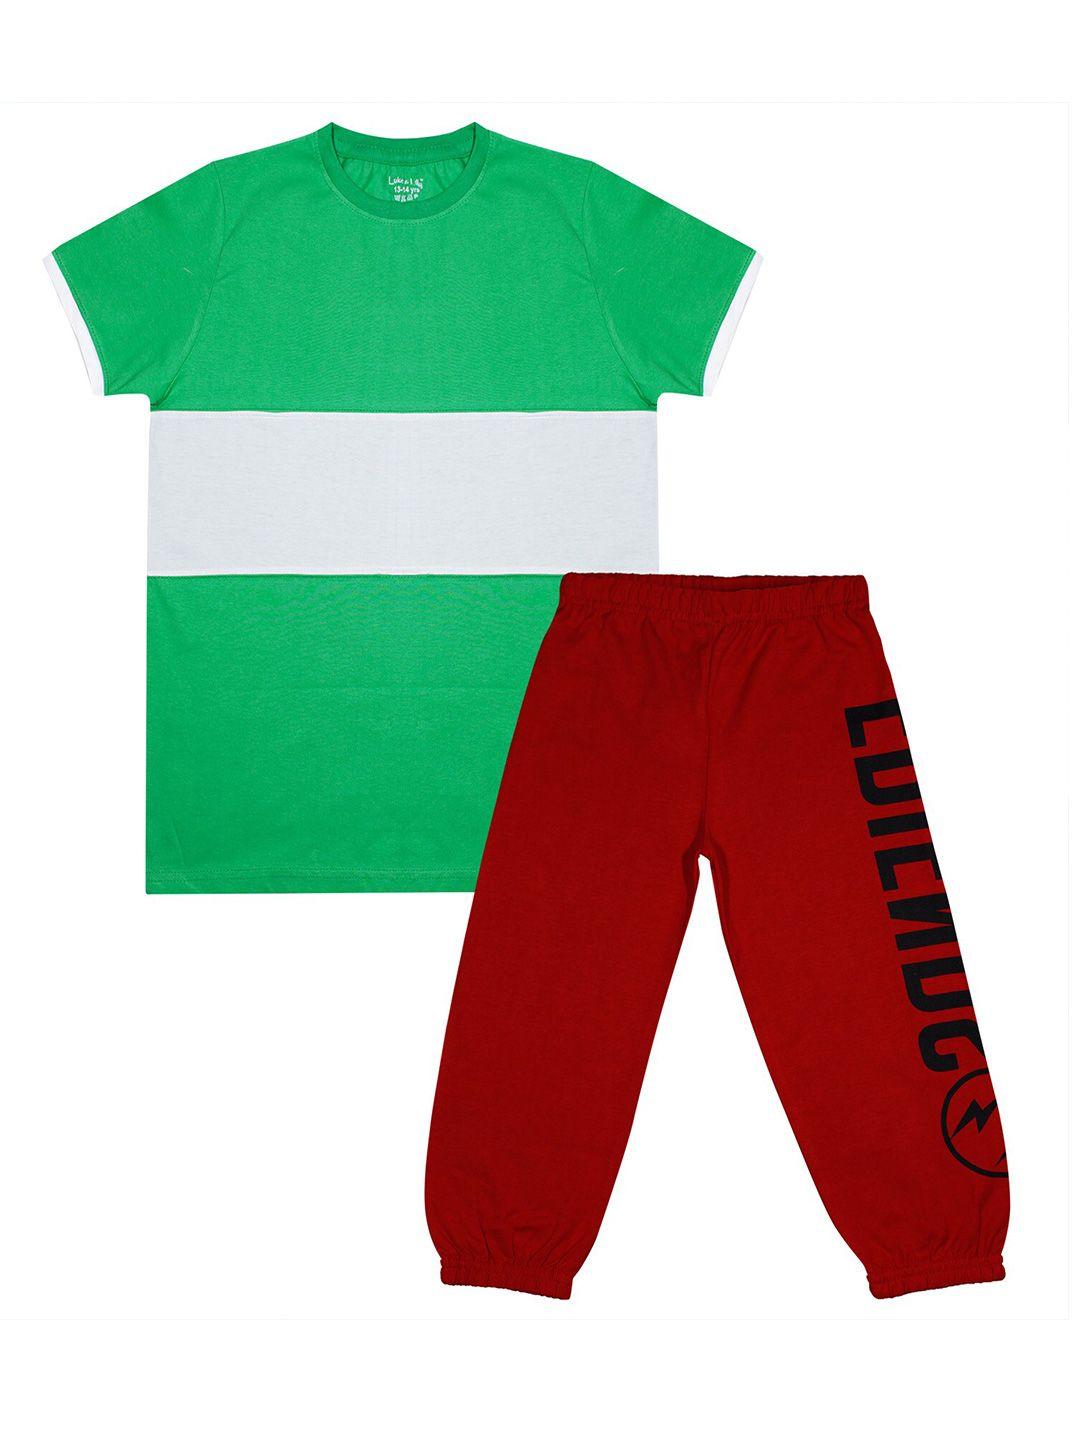 luke-&-lilly-boys-green-&-red-colourblocked-t-shirt-with-pyjamas